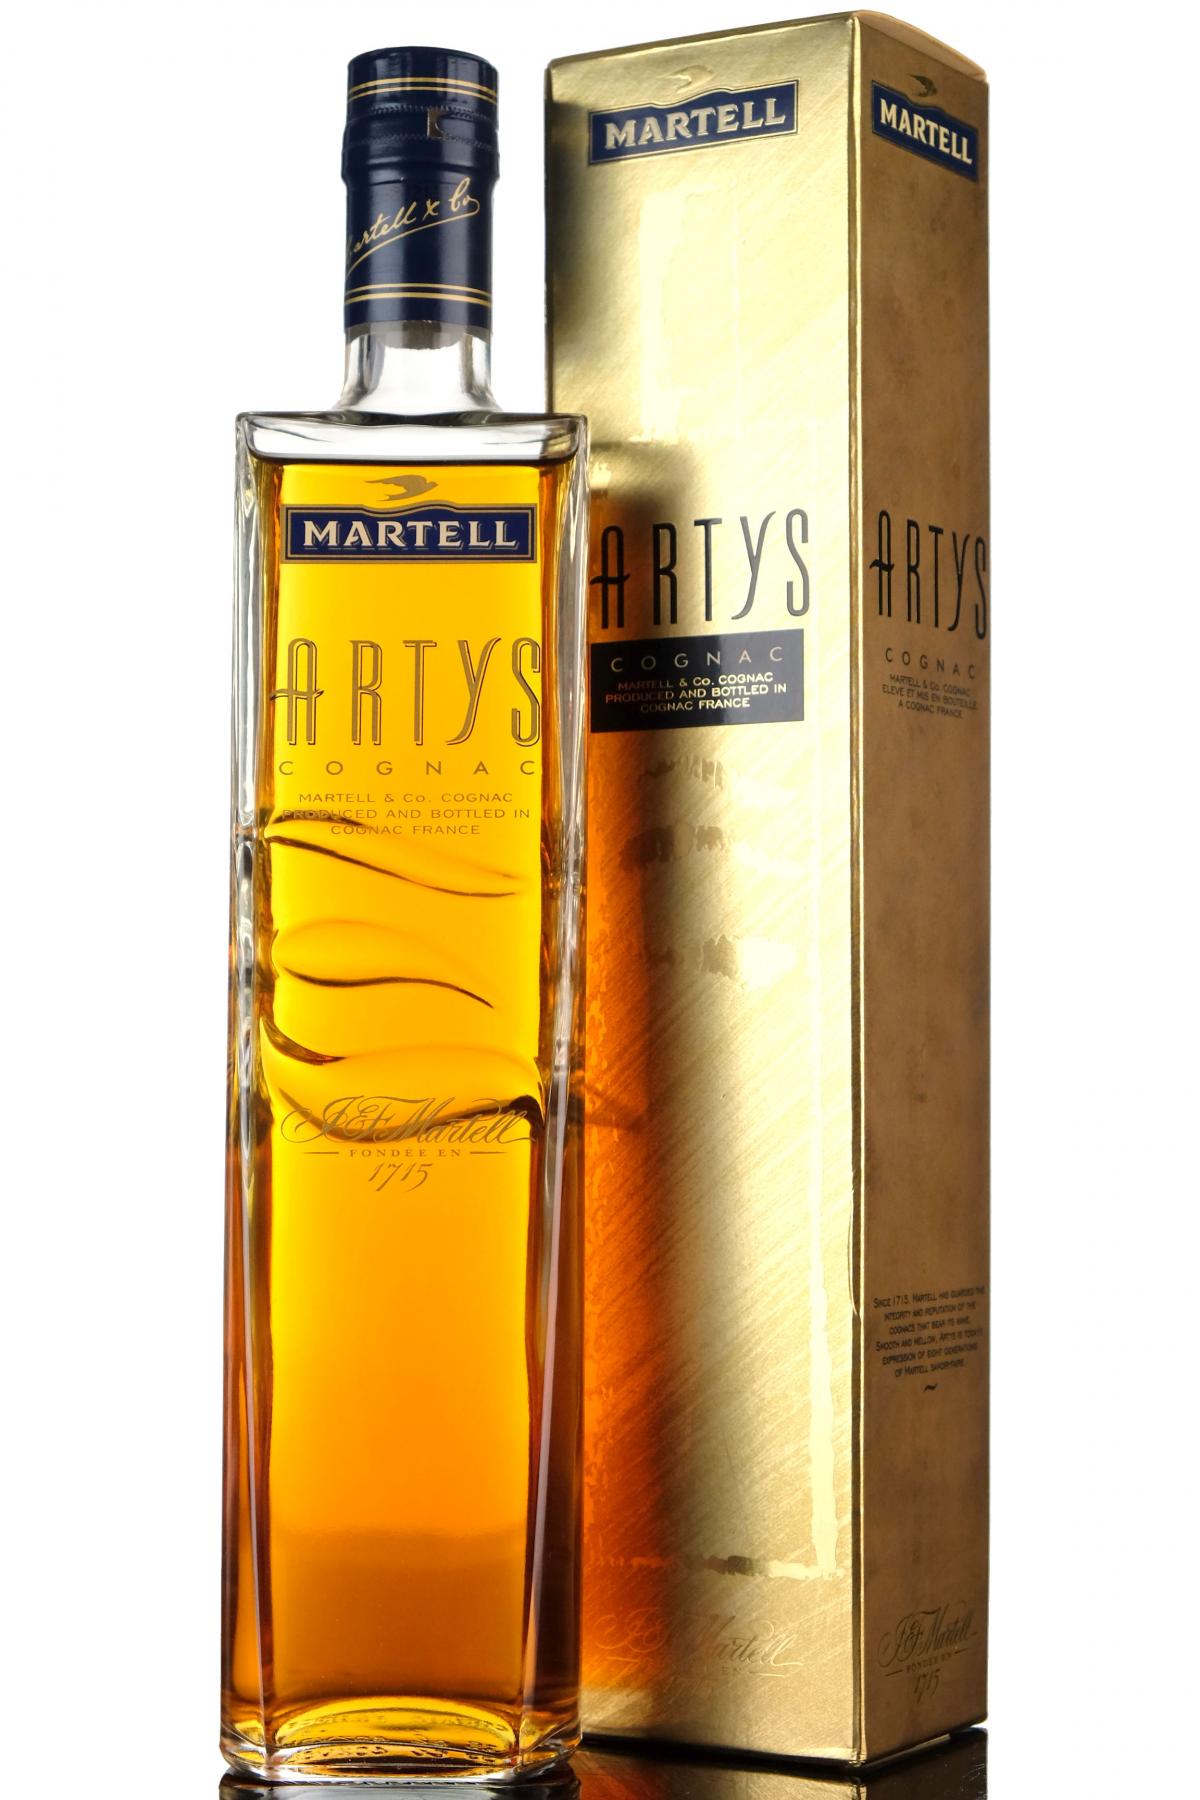 Martell Artys Cognac - Half Bottle